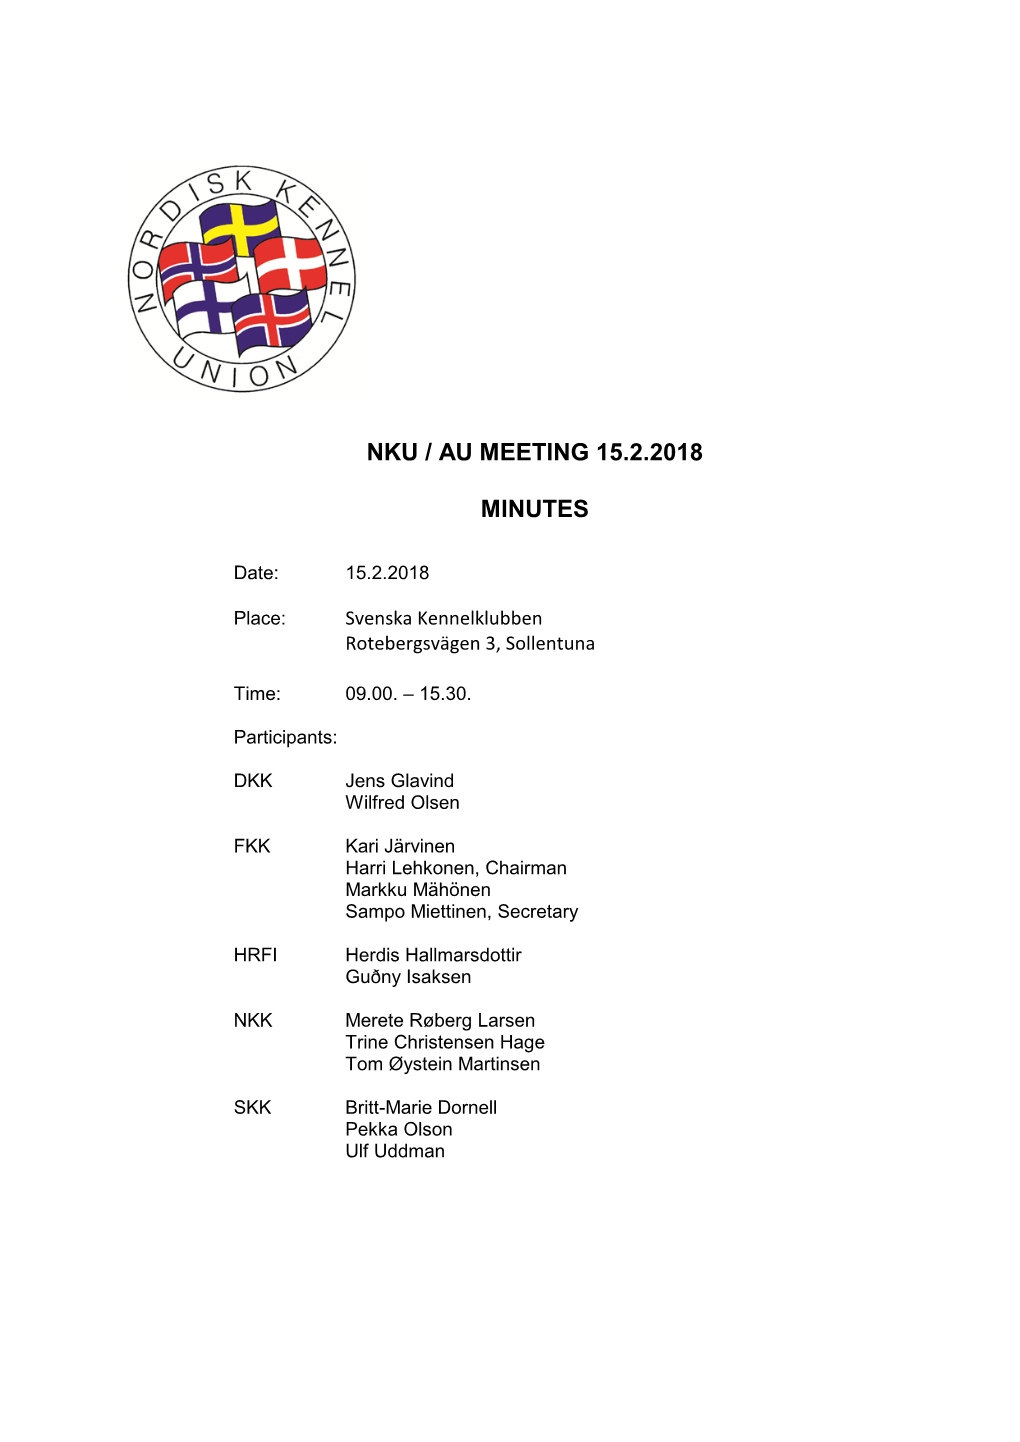 NKU/AU Meeting Minutes 15 February 2018